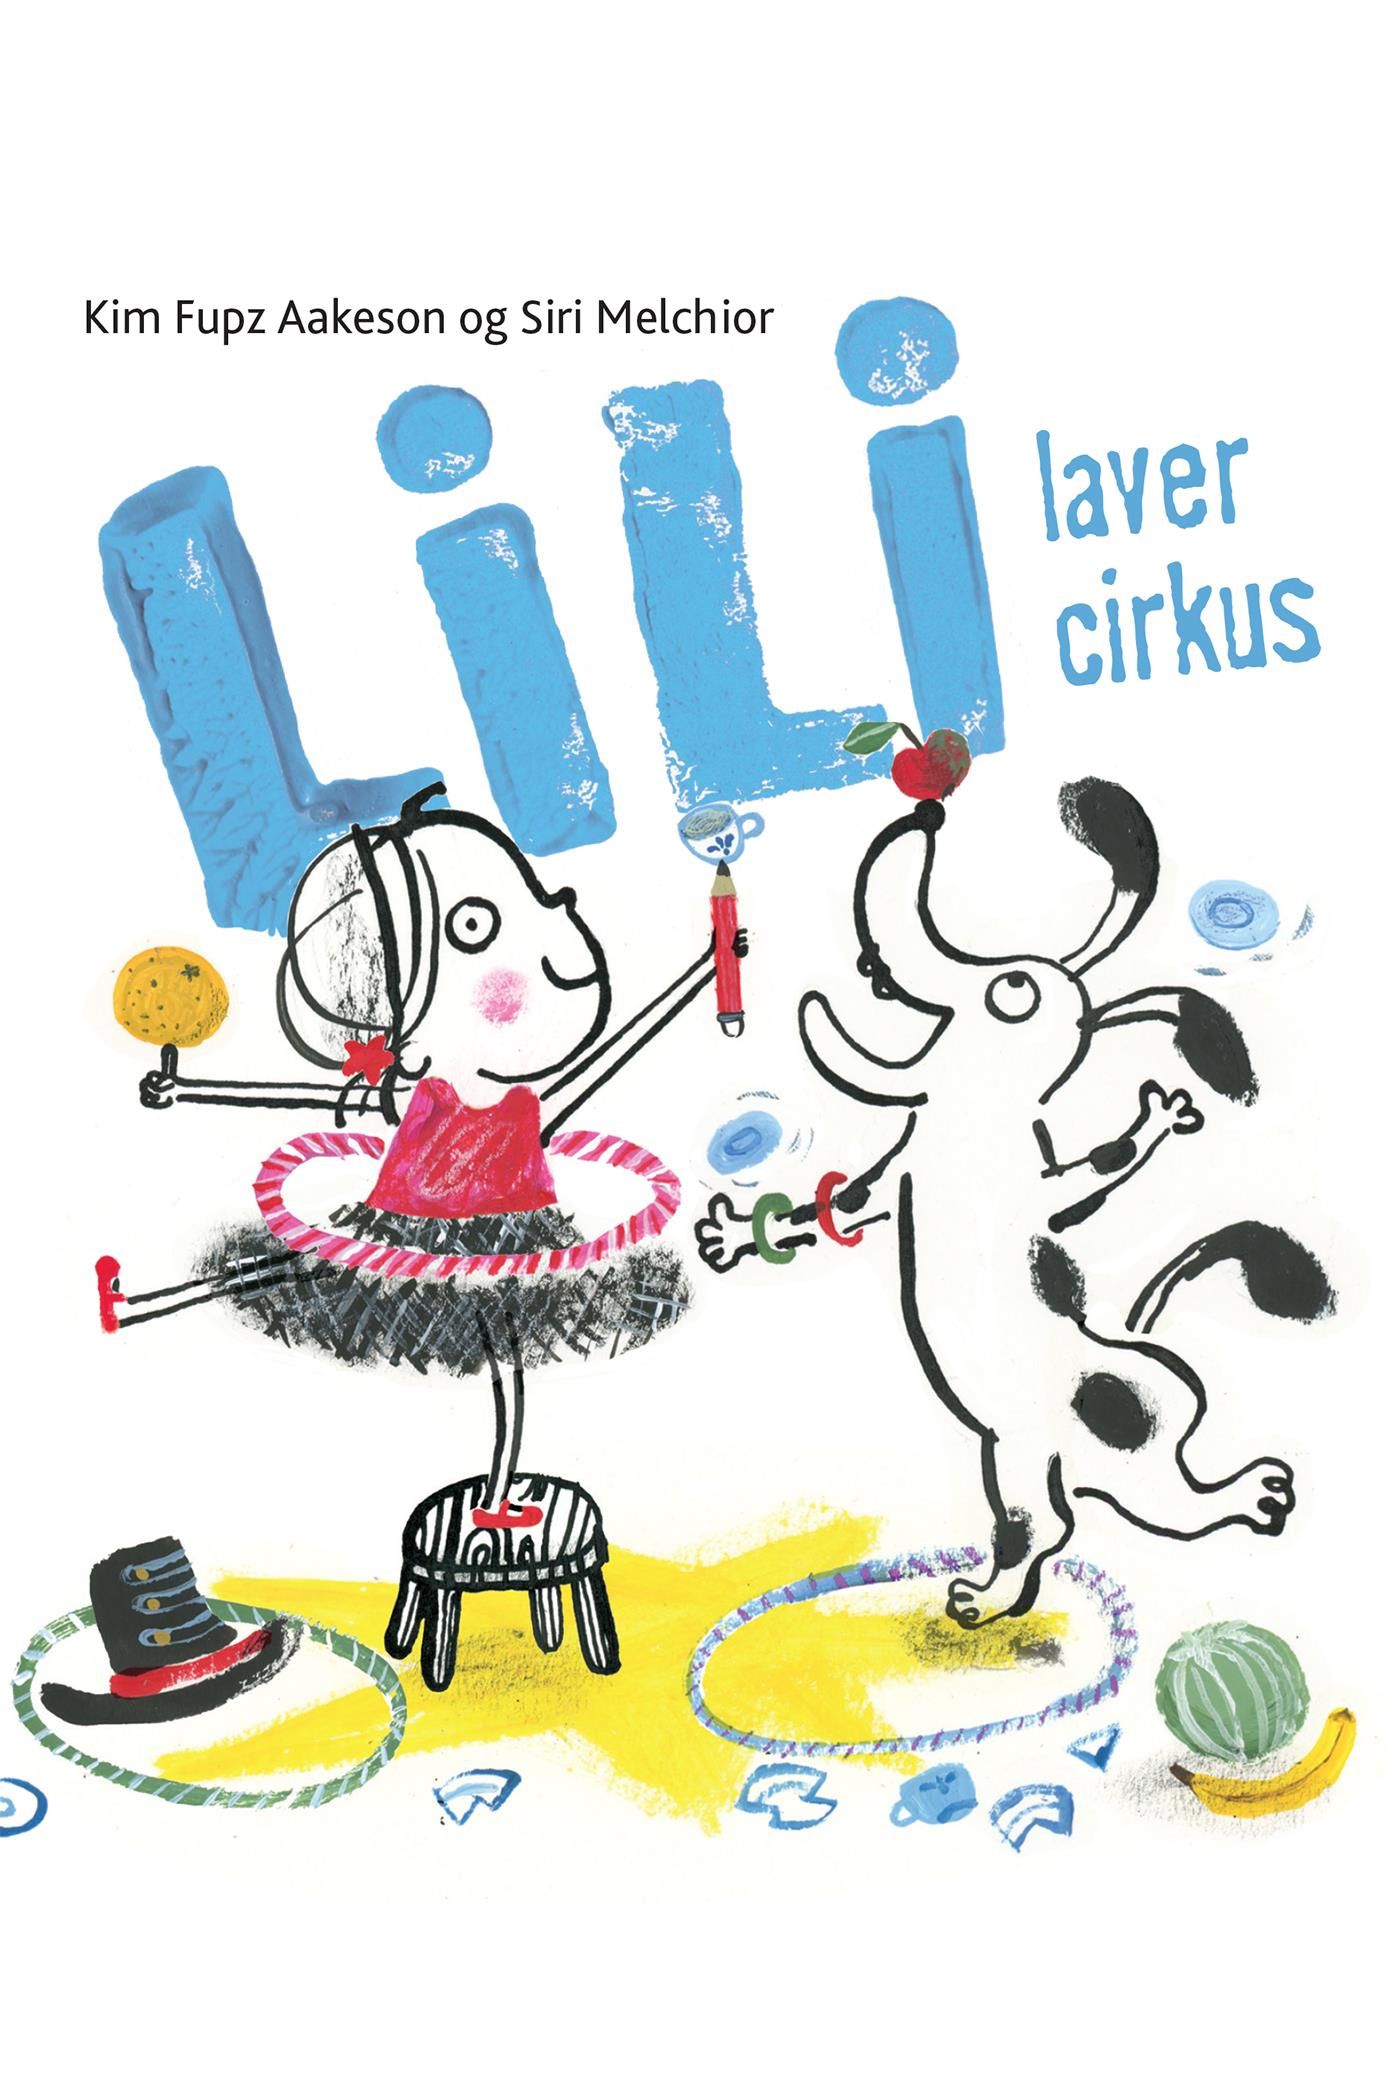 Lili laver cirkus - Lyt& Læs, e-bok av Siri Melchior, Kim Fupz Aakeson